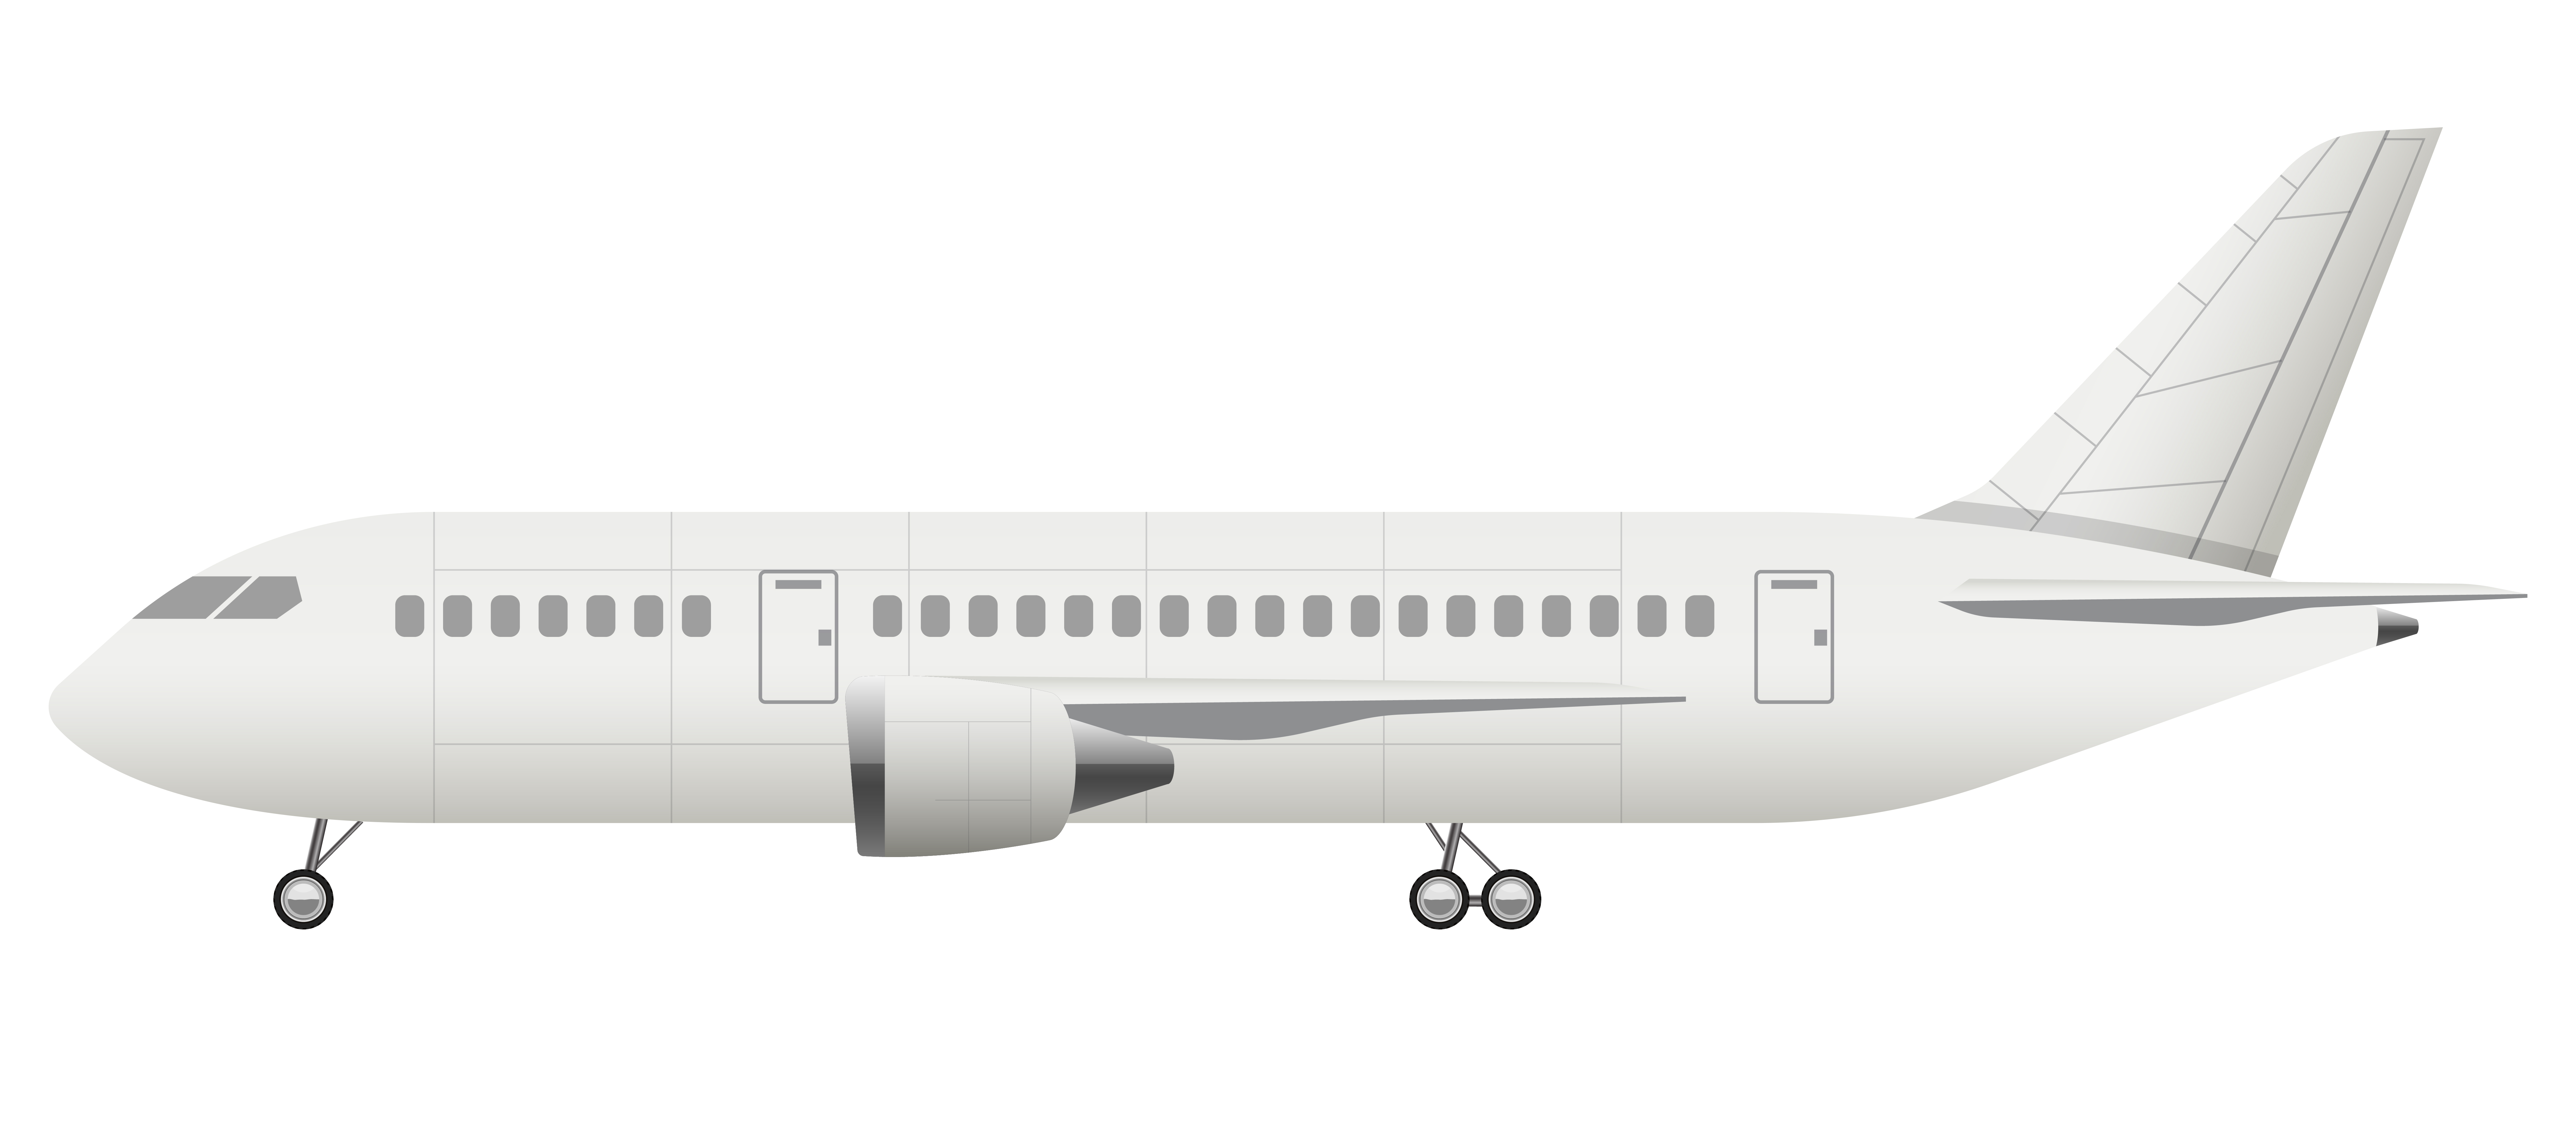 Biplane drawing | Public domain vectors